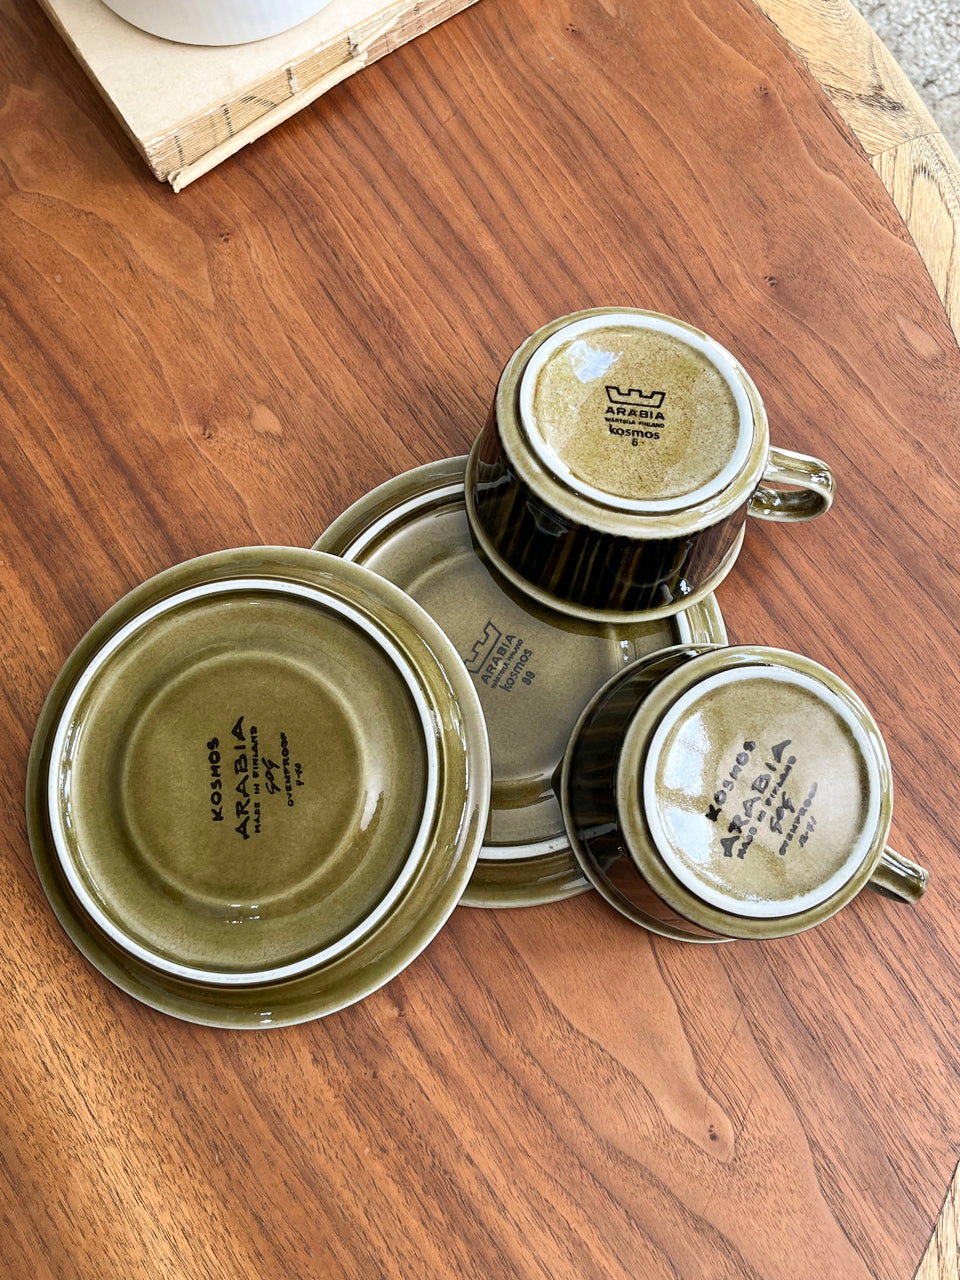 ARABIA Kosmos Tea Cup and Saucer/アラビア コスモス ティーカップ＆ソーサー 北欧食器